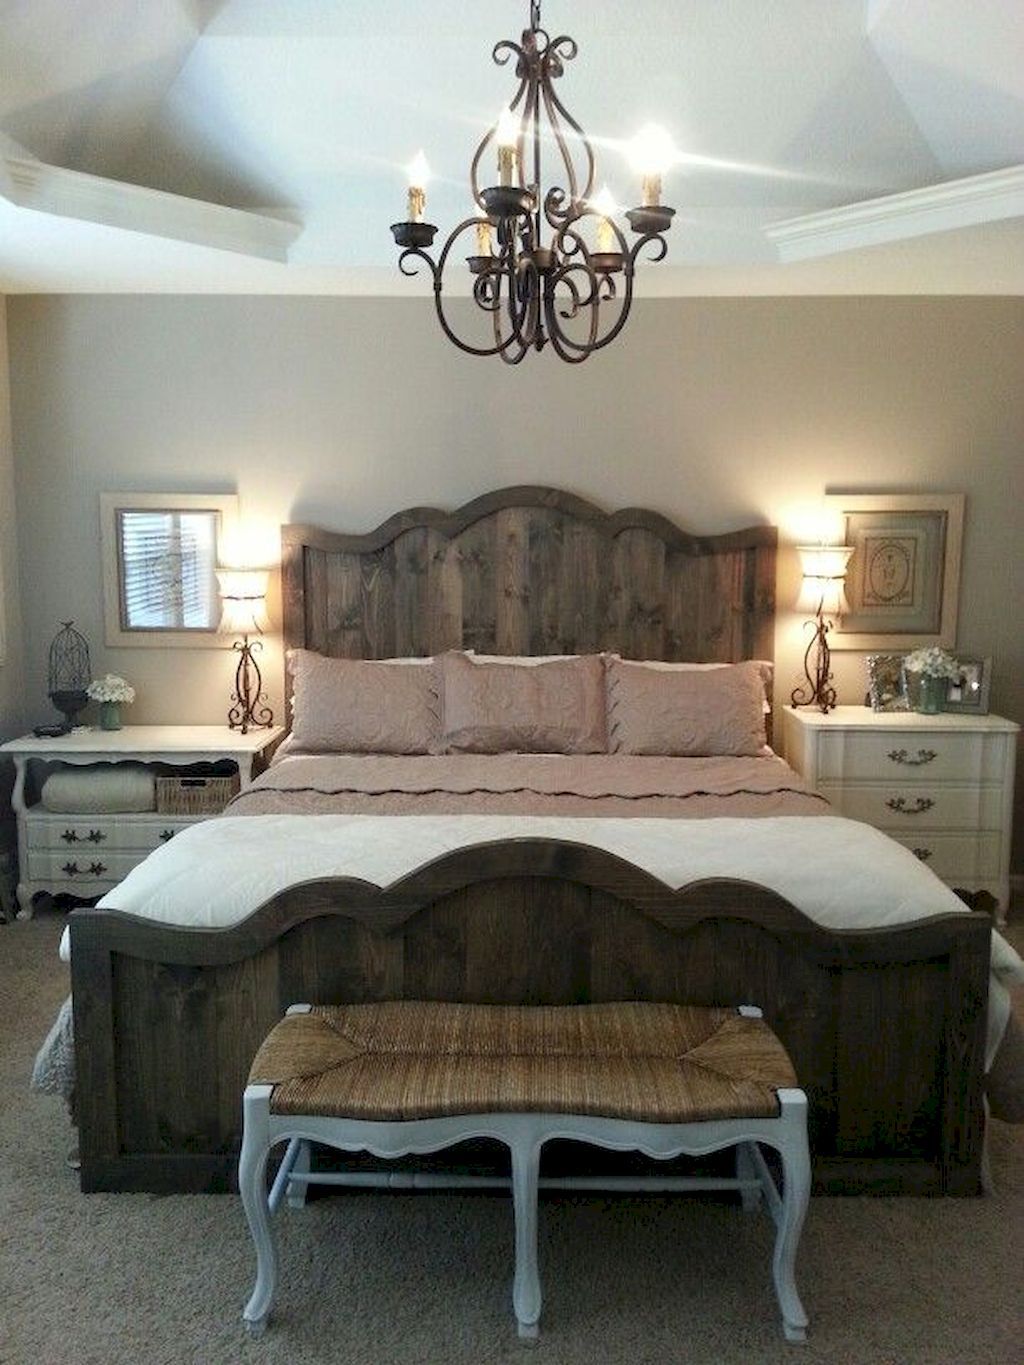 Rustic farmhouse master bedroom ideas 4.jpg